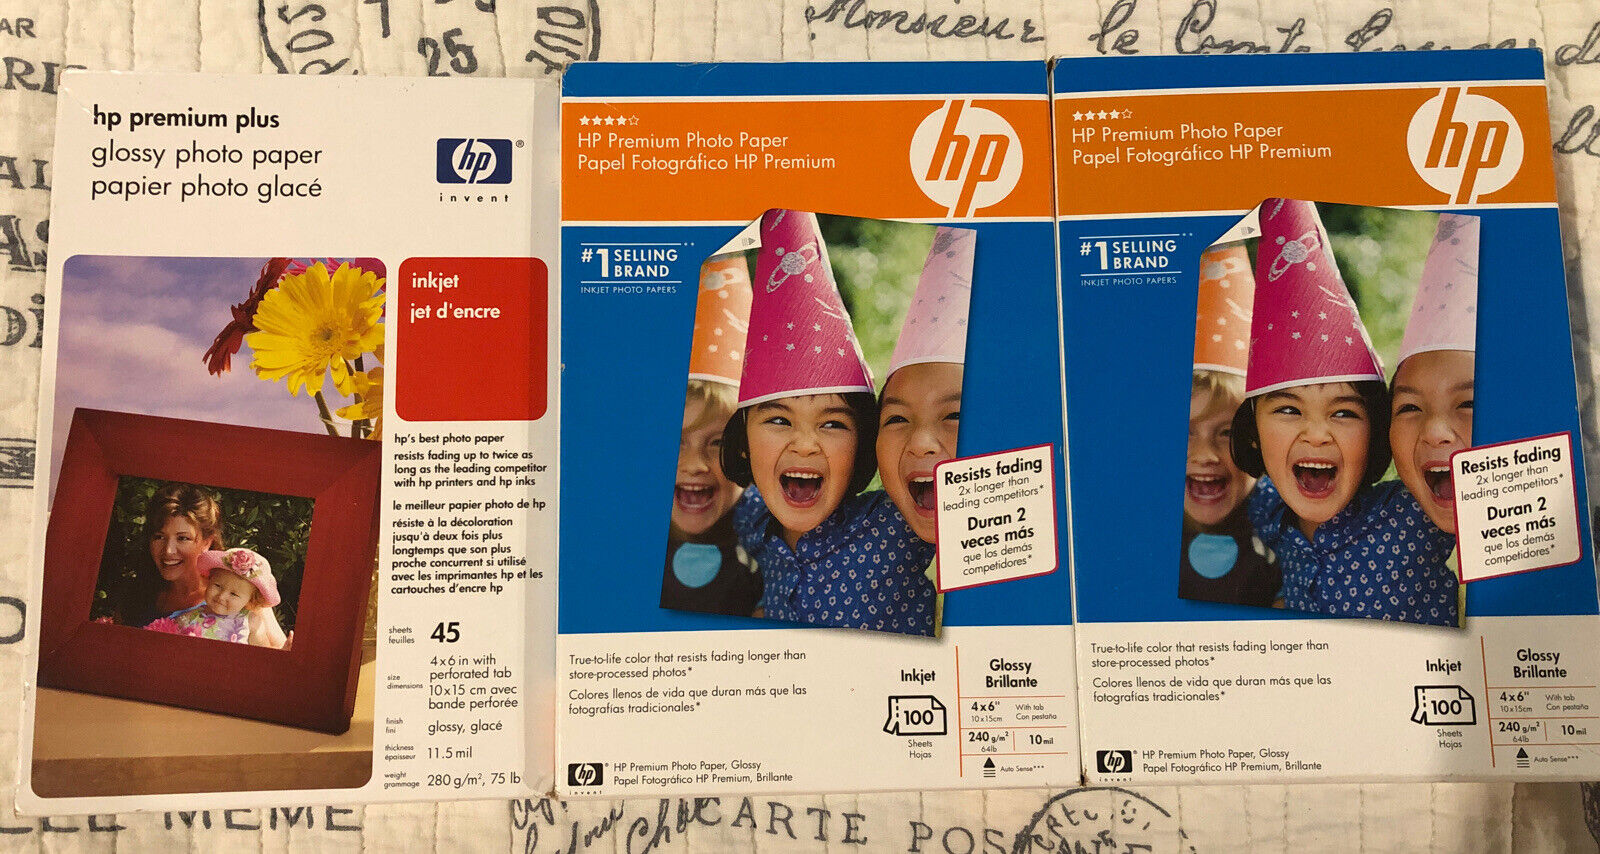 LOT of 3 New 245 Prints Genuine HP Q1990A Premium Photo Paper  Glossy  4 x 6